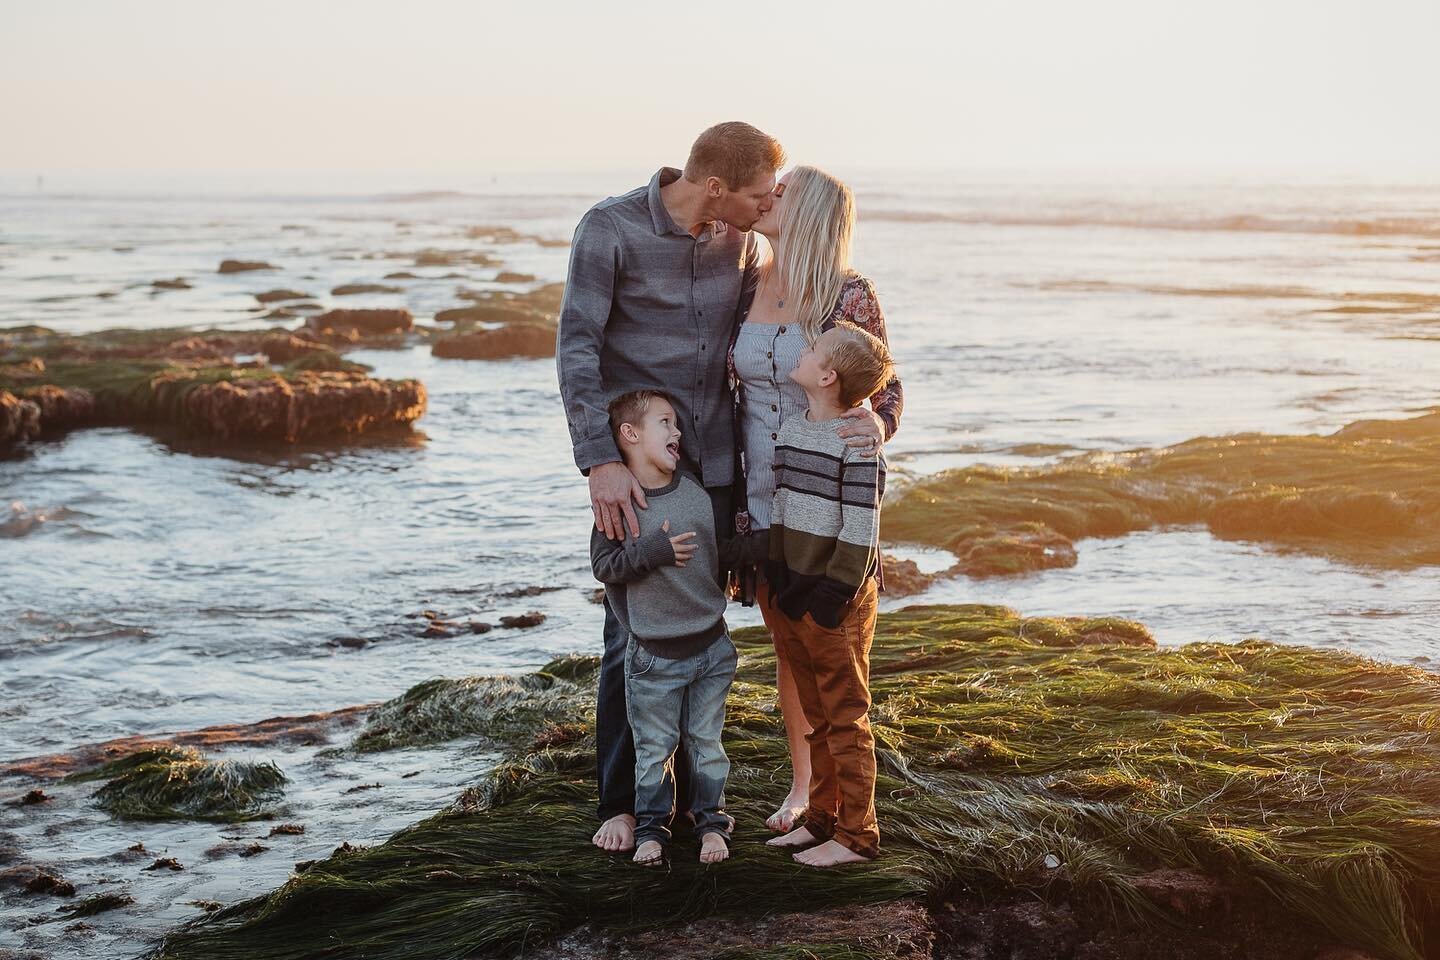 Solana Beach⁠
.⁠
.⠀⠀⠀⁠
.⠀⠀⠀⁠
.⠀⠀⠀⁠
.⠀⠀⠀⁠
.⠀⠀⠀⁠
.⠀⠀⠀⁠
.⠀⠀⠀⁠
.⠀⠀⠀⁠
.⠀⠀⠀⁠
#sandiegofamilyphotographer ⠀⠀⠀⁠
#familyphotographersandiego⠀⠀⠀⁠
#sunsetcliffs ⠀⠀⠀⁠
#sandiegofamilyphotography ⠀⠀⠀⁠
#sandiegofamilyphotos ⠀⠀⠀⁠
#sandiegofamilyportraits ⠀⠀⠀⁠
#thekn